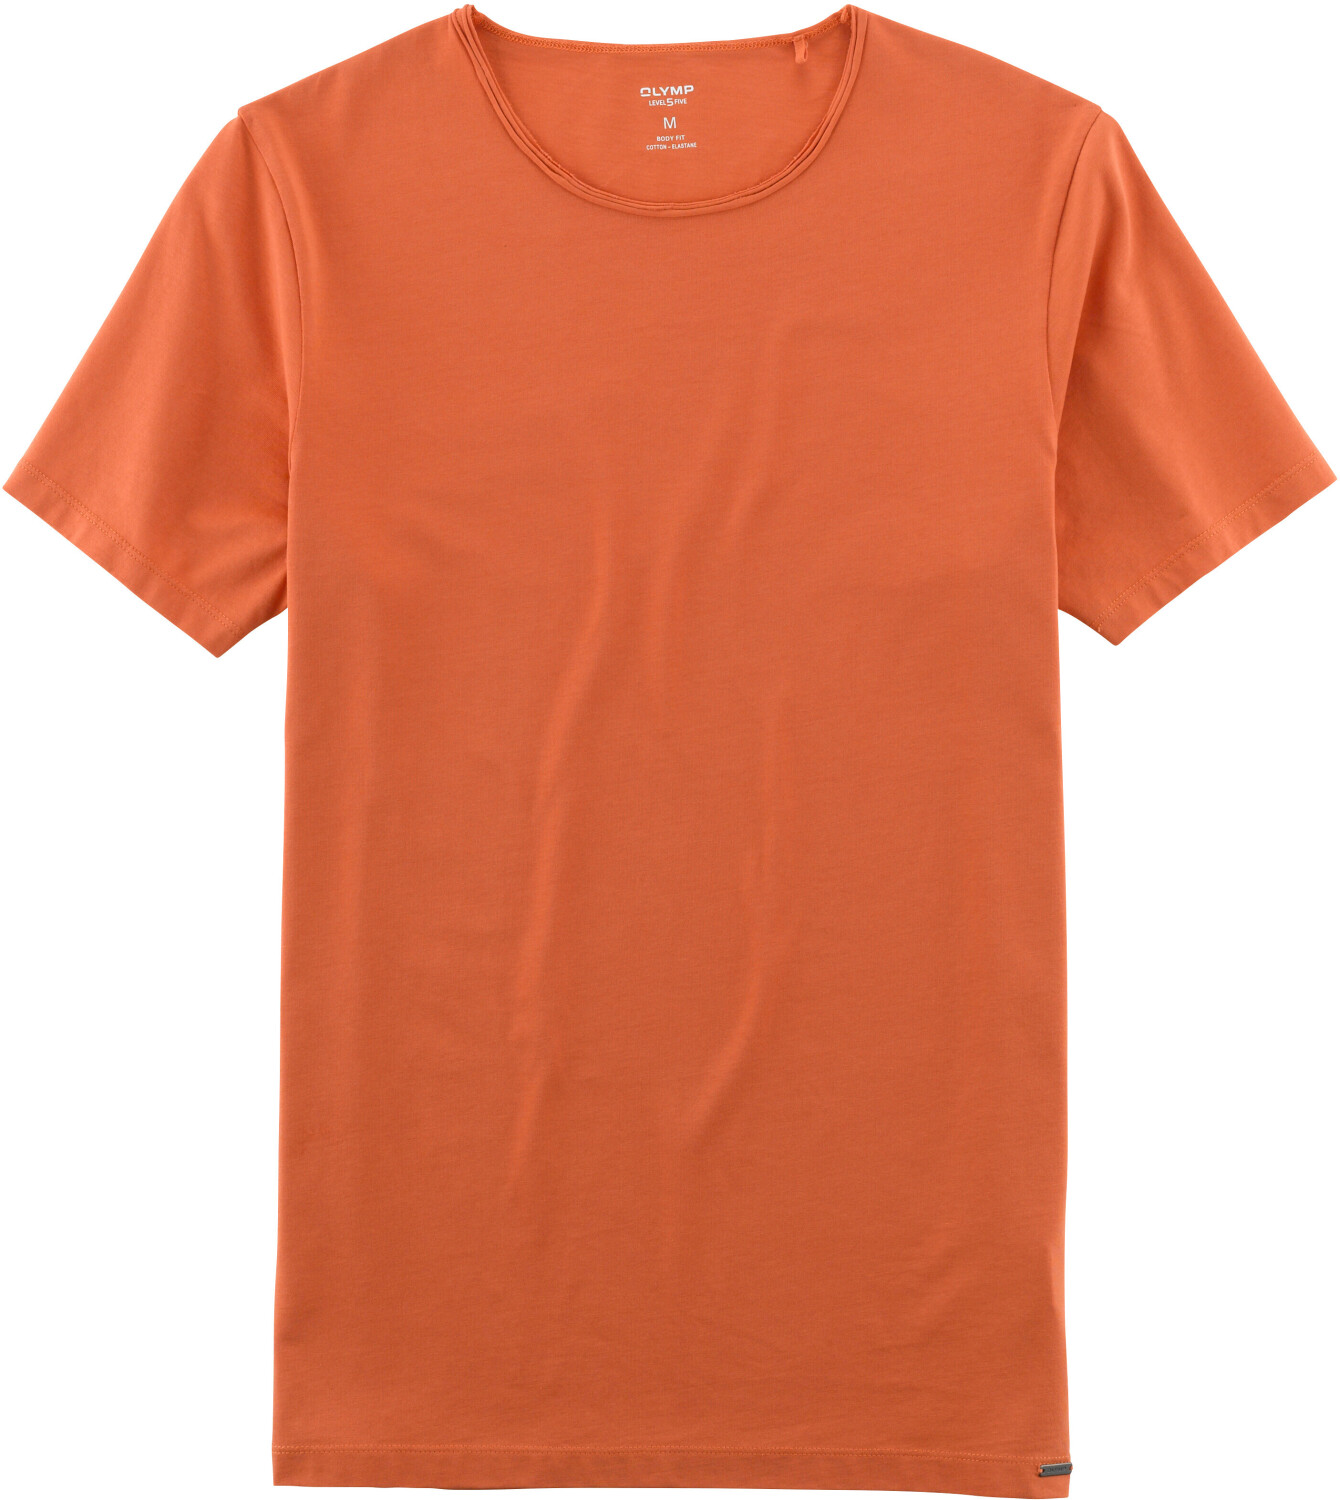 bei | € 19,95 Preisvergleich Body Five Level orange (5660-32-36) T-Shirt ab Fit OLYMP Casual